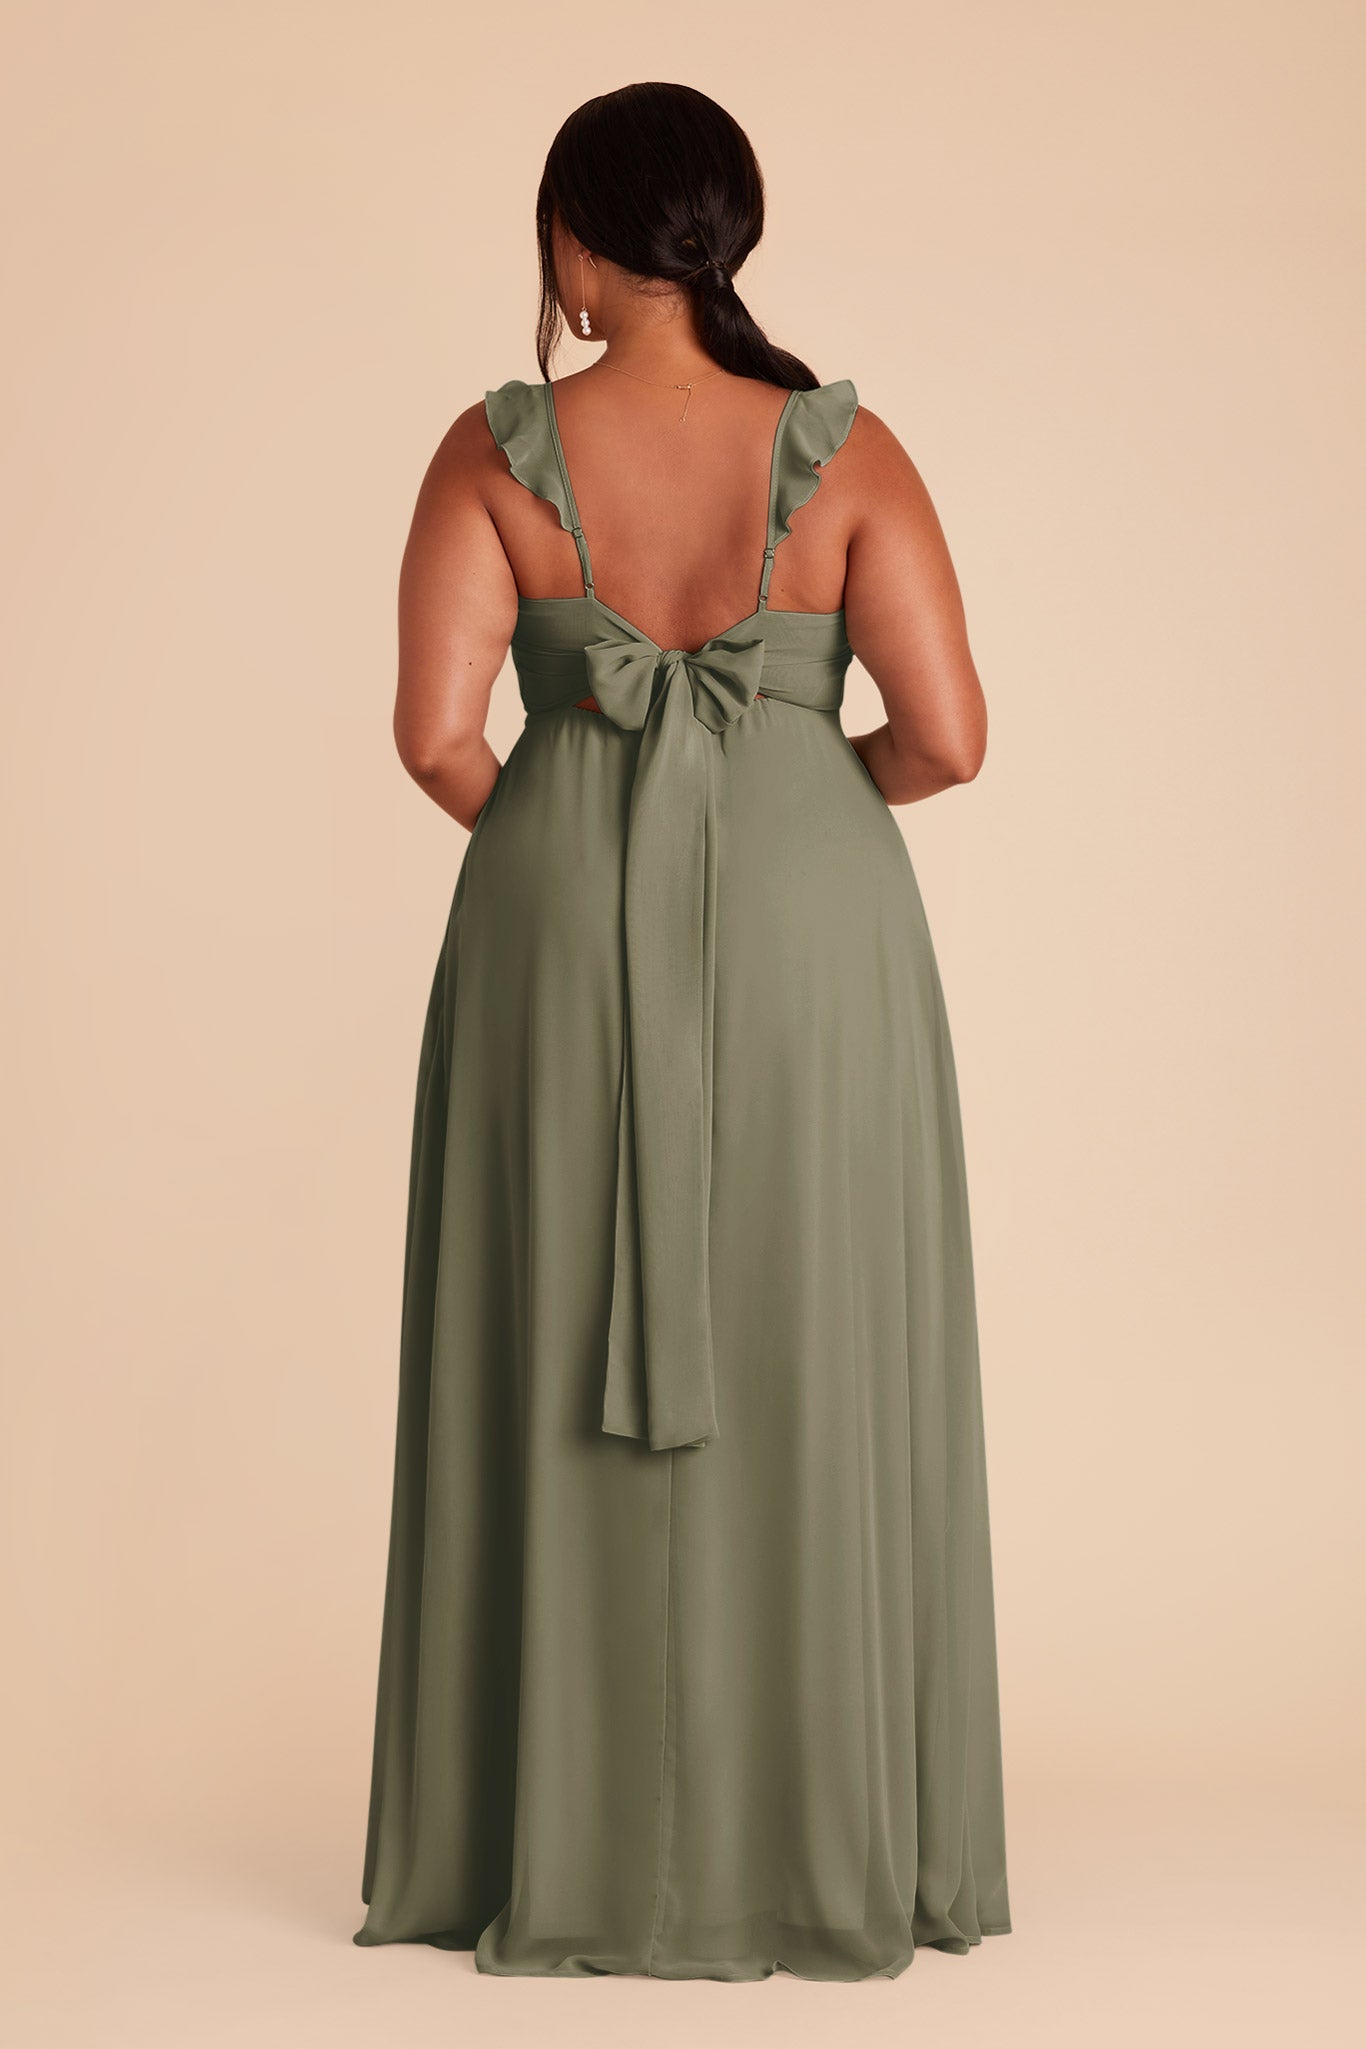 Moss Green Doris Chiffon Dress by Birdy Grey